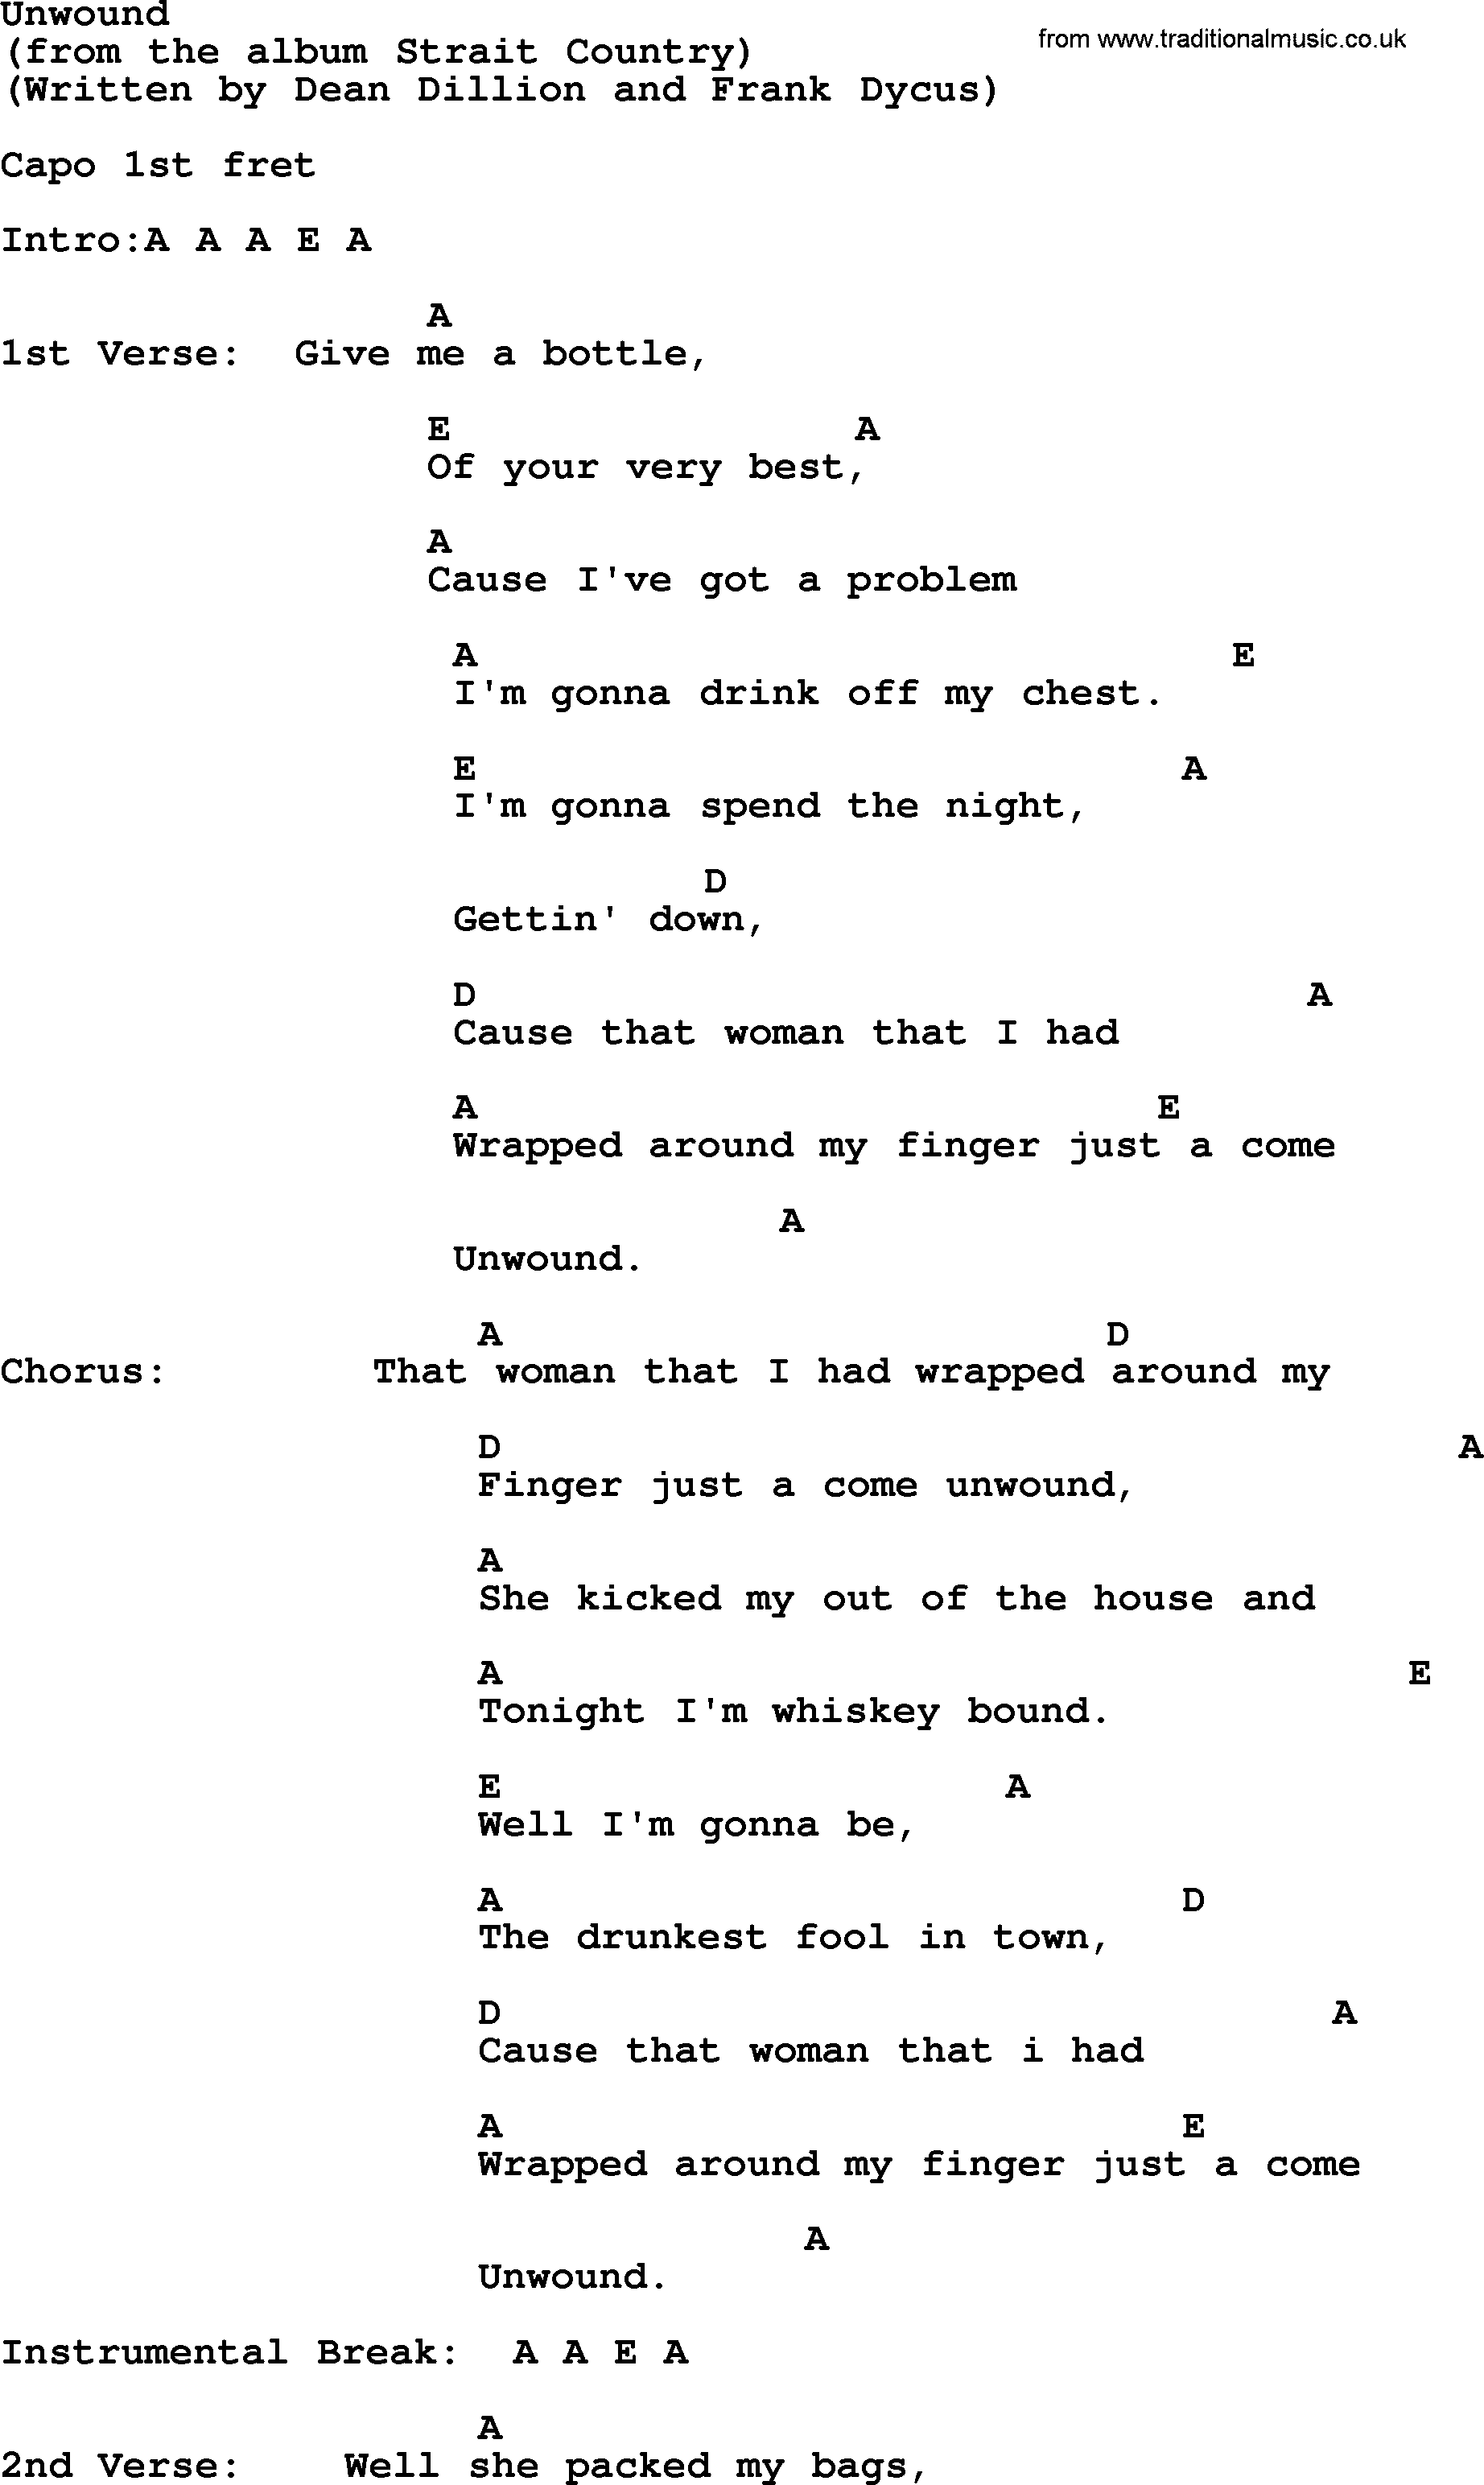 George Strait song: Unwound, lyrics and chords